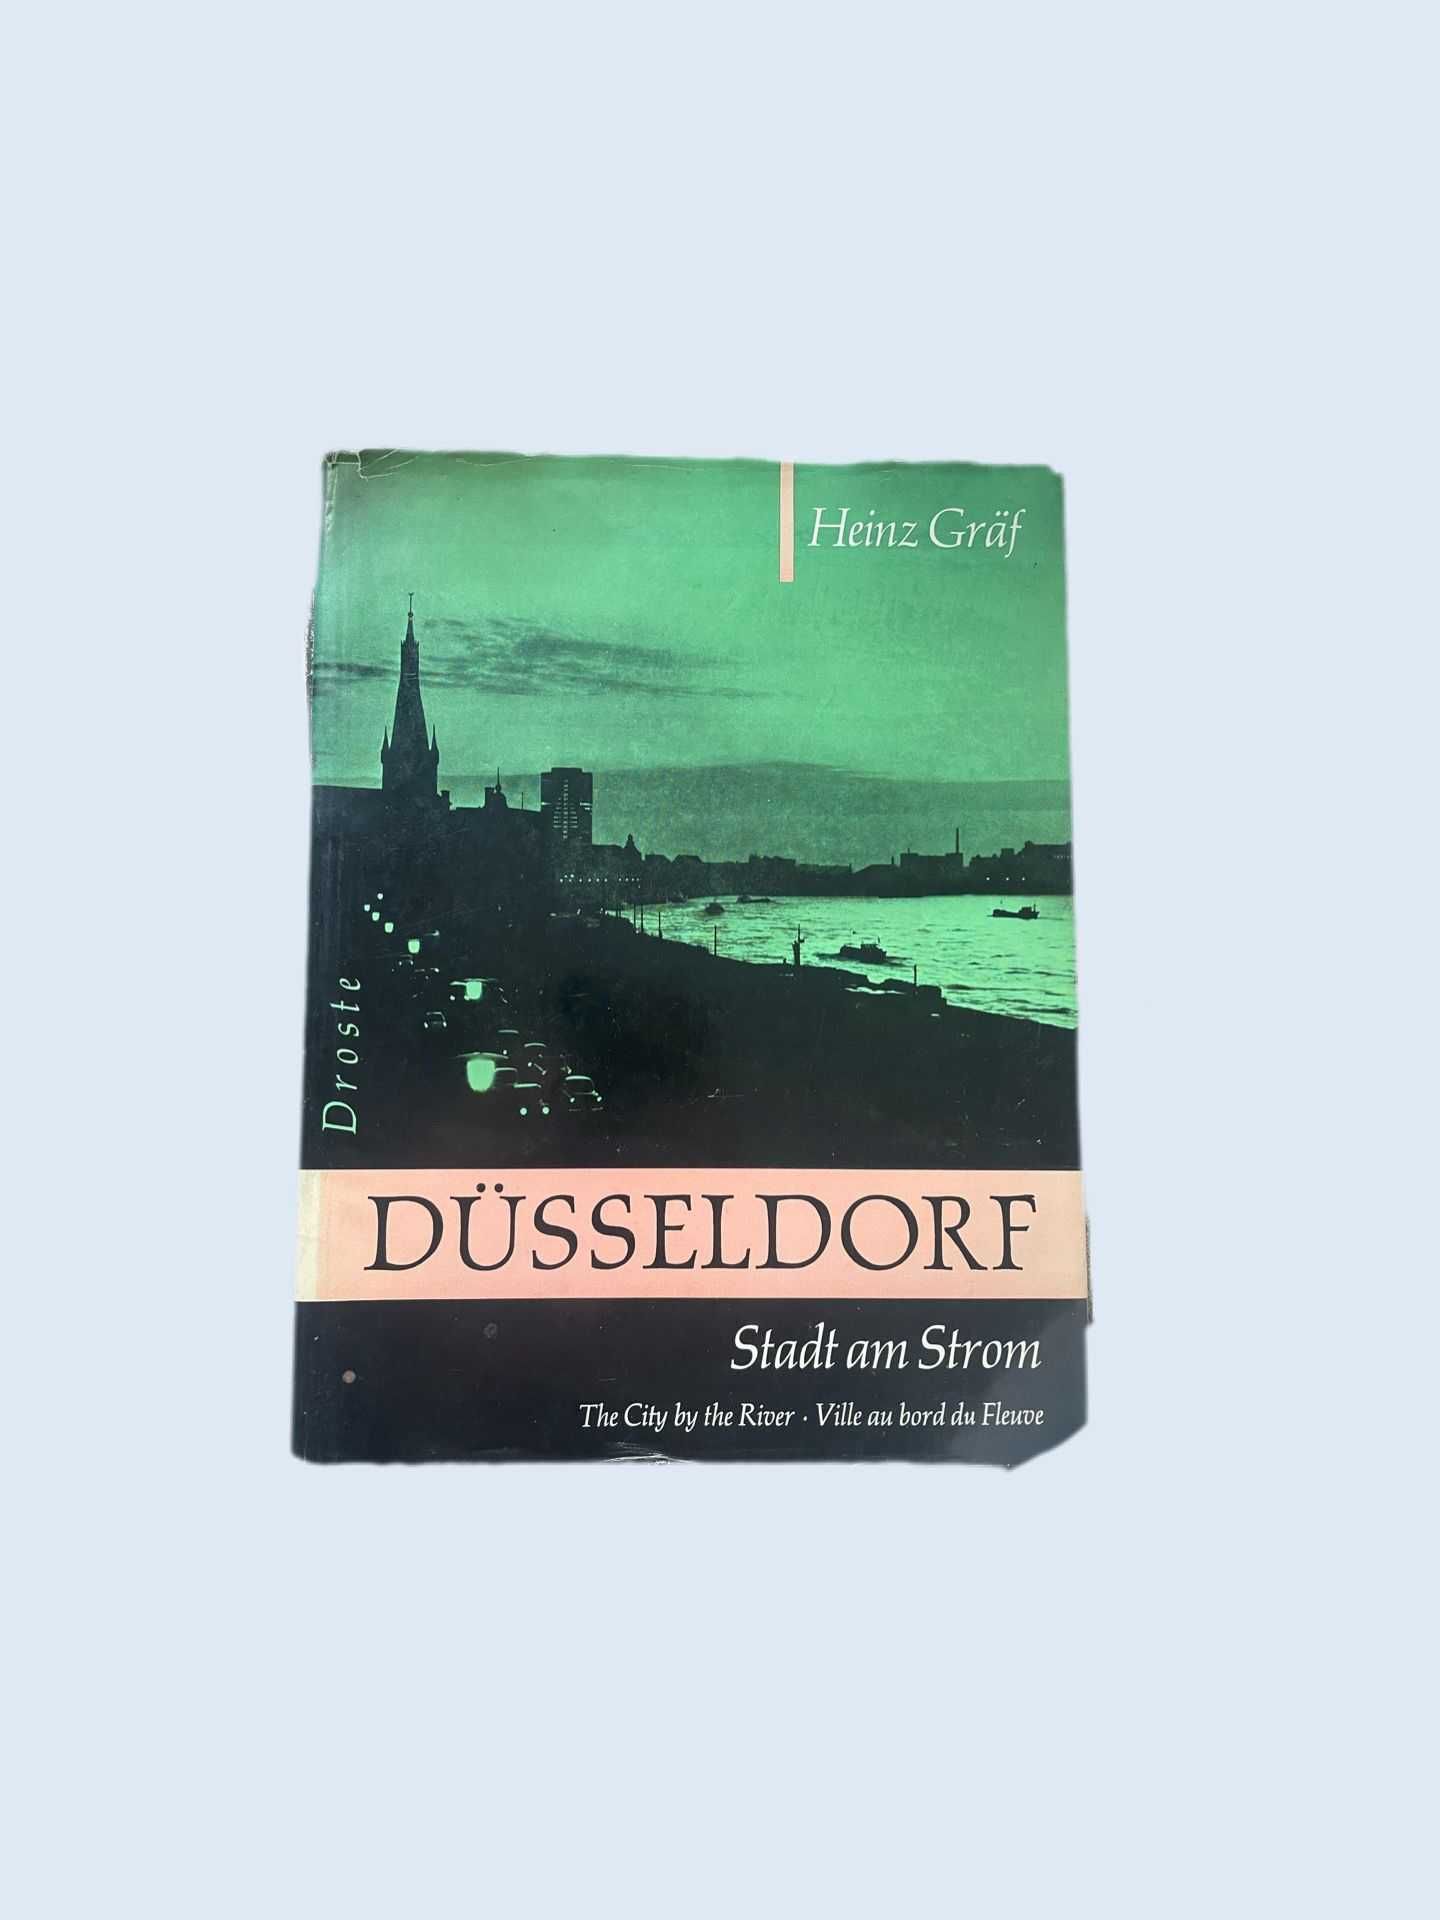 Livro “Düsseldorf - Stadt am Strom” por Heinz Gräf - 1963